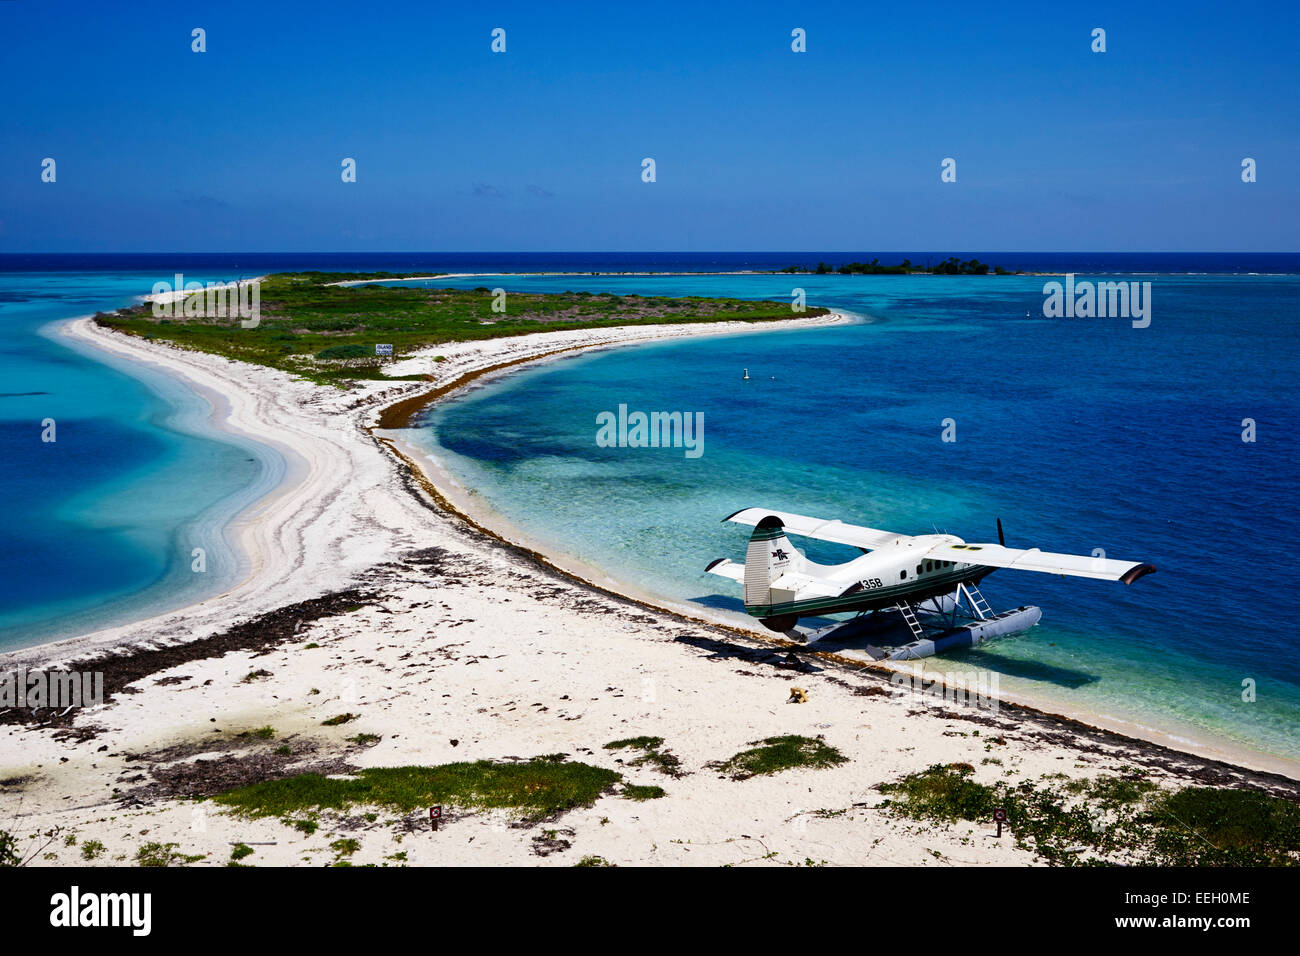 dehaviland dhc-3 otter seaplane on the beach and bush key at the dry tortugas florida keys usa Stock Photo